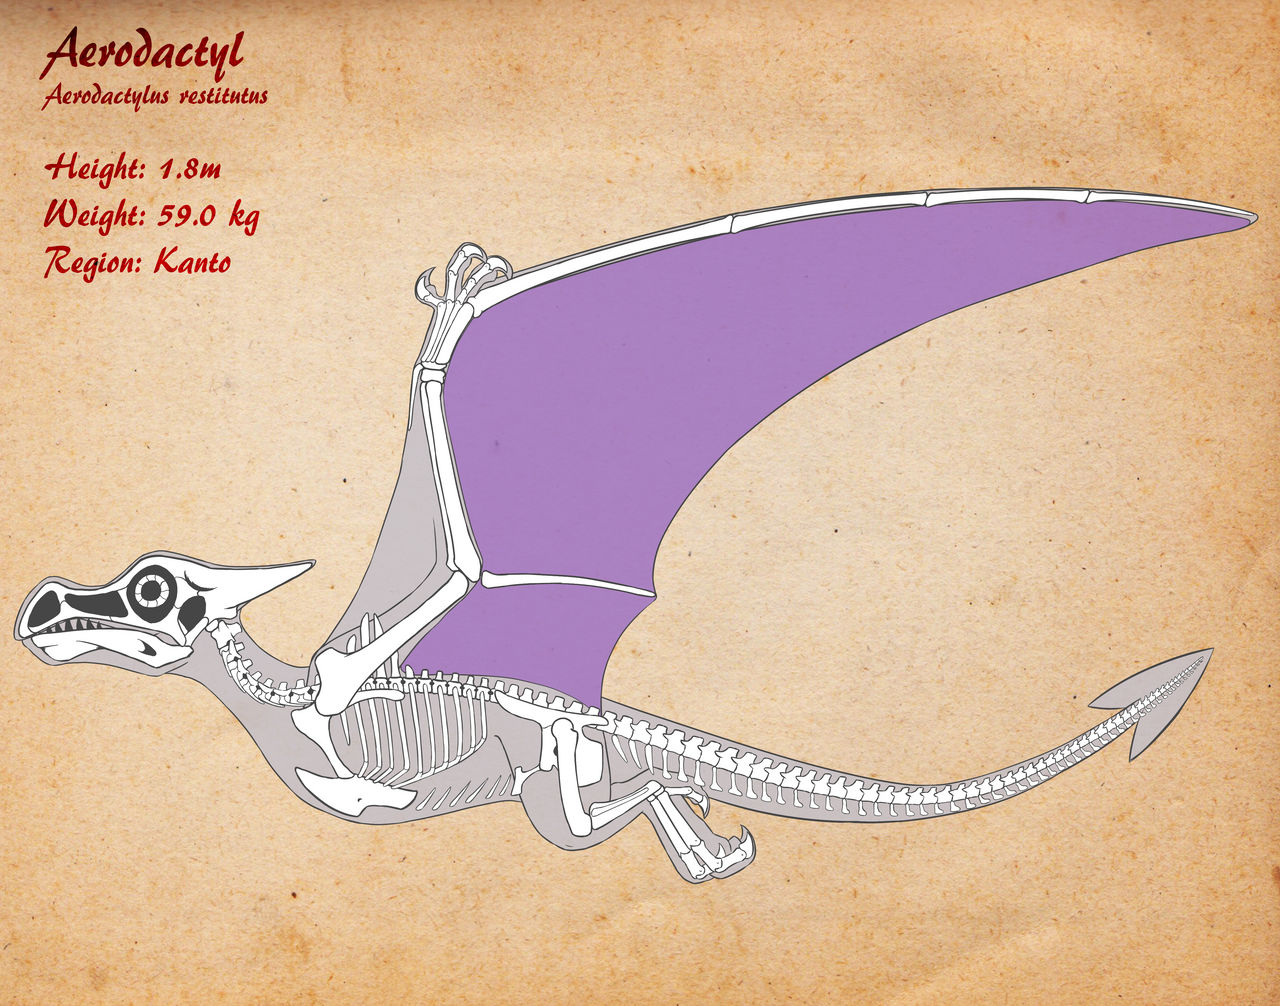 Aerodactyl THE Fossil Pokemon by SharkaneNoa on DeviantArt